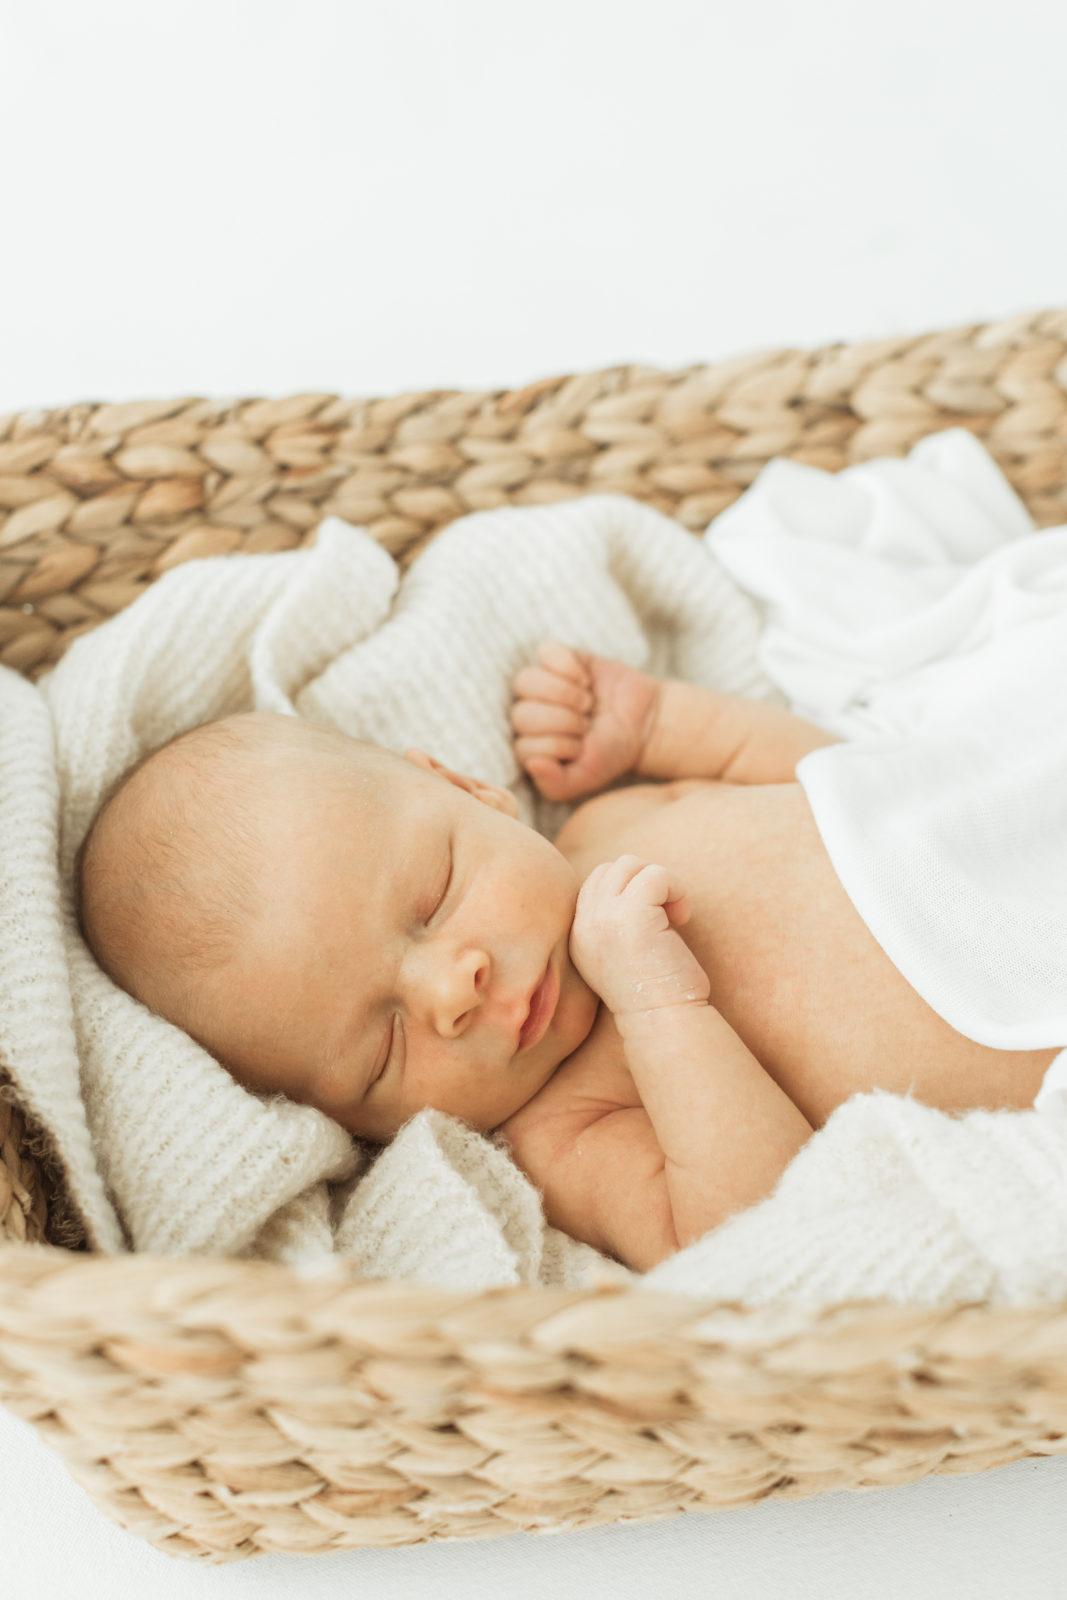 Newborn baby boy in woven basket sleeping. 